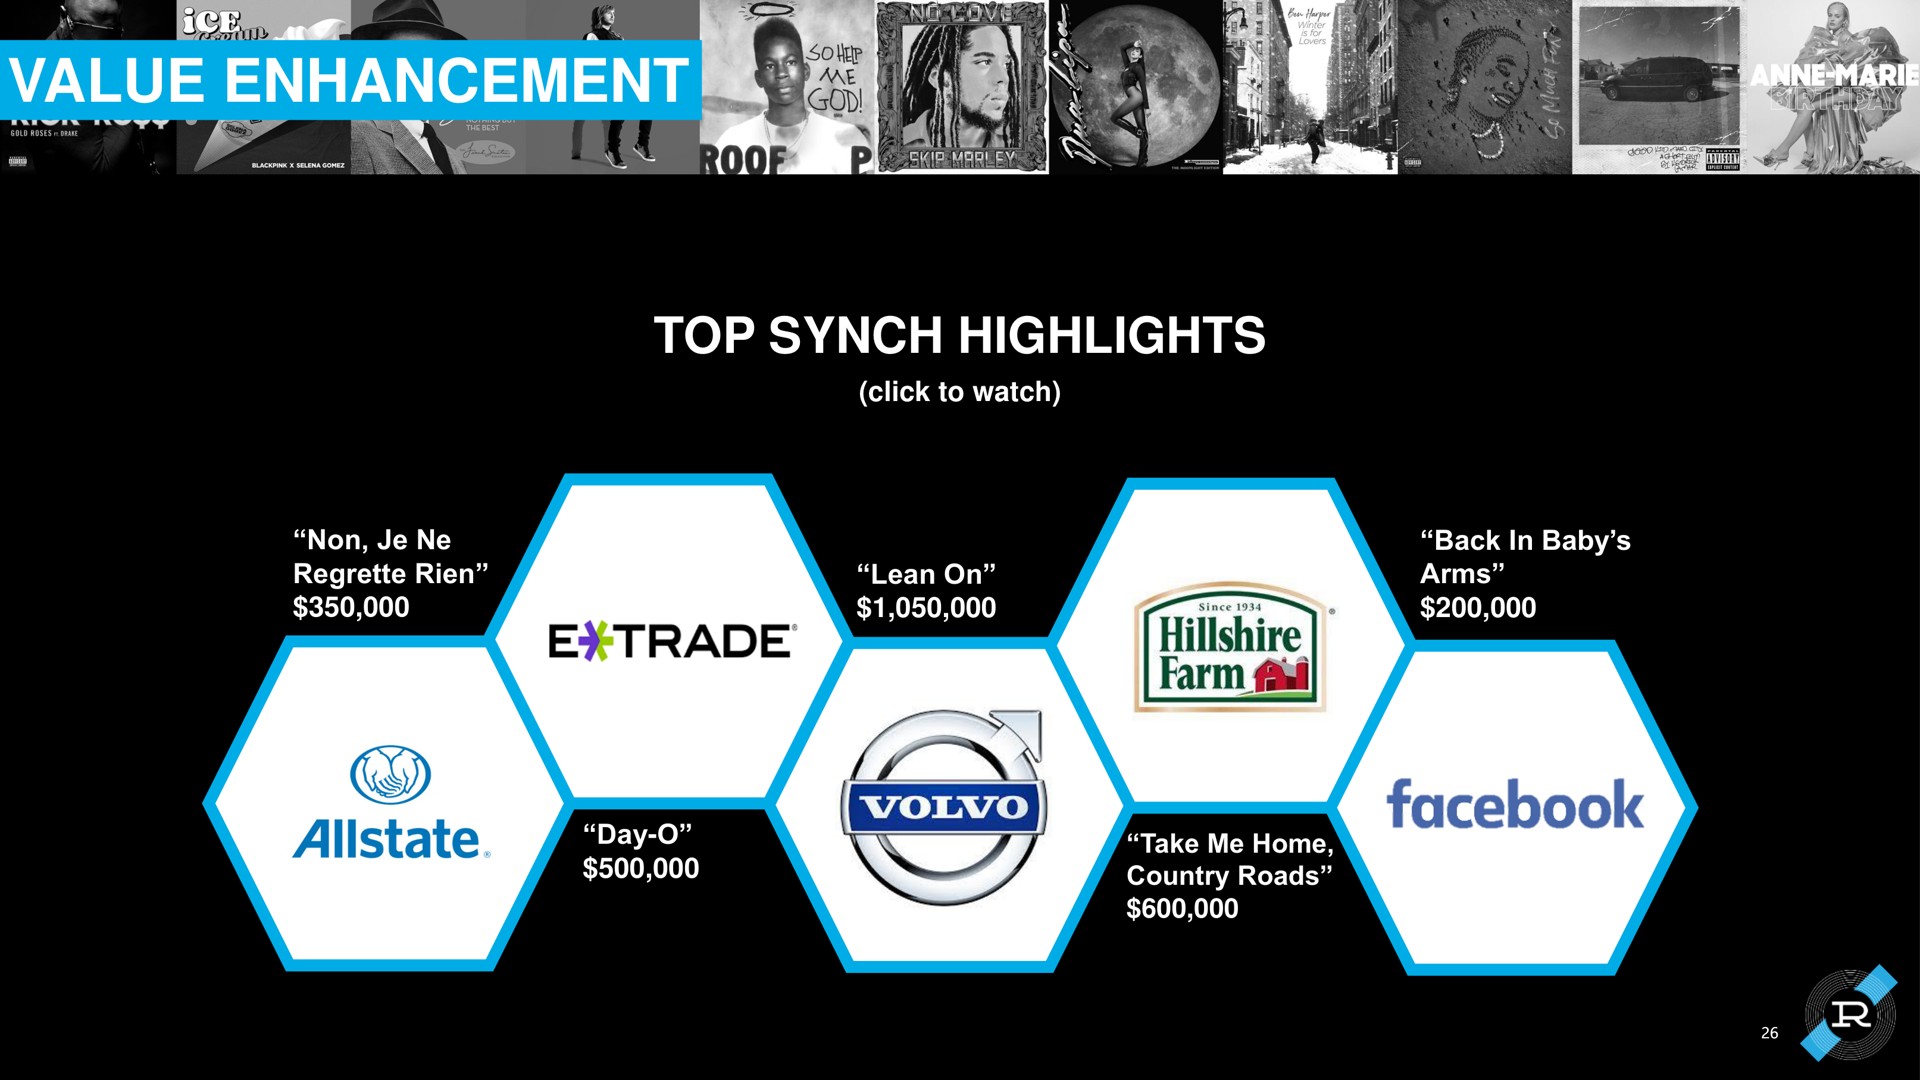 value enhancement top synch highlights trade | Reservoir